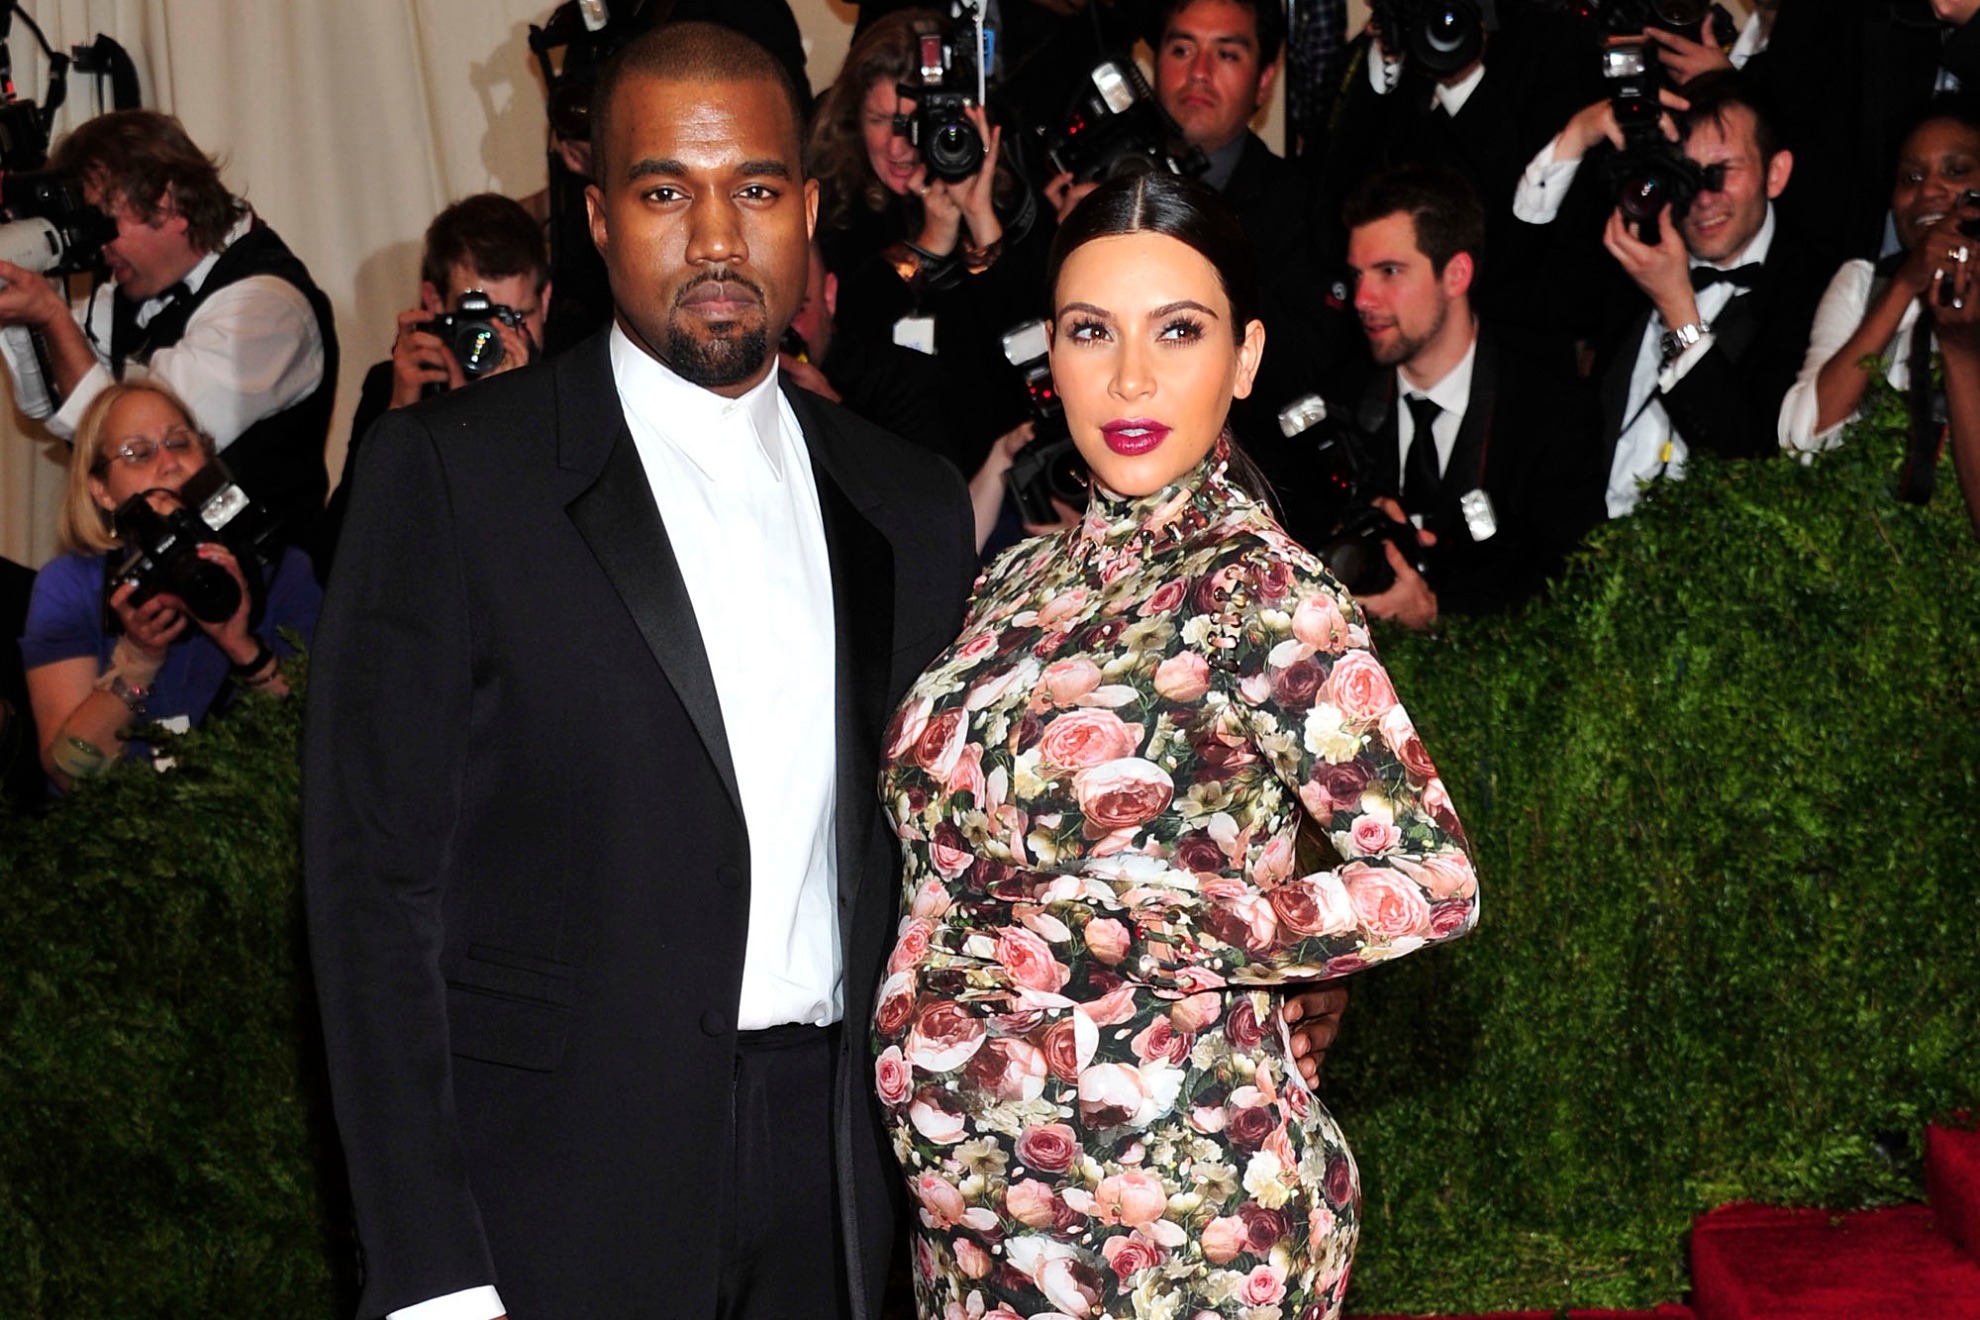 Kanye West and Kim Kardashian at an event